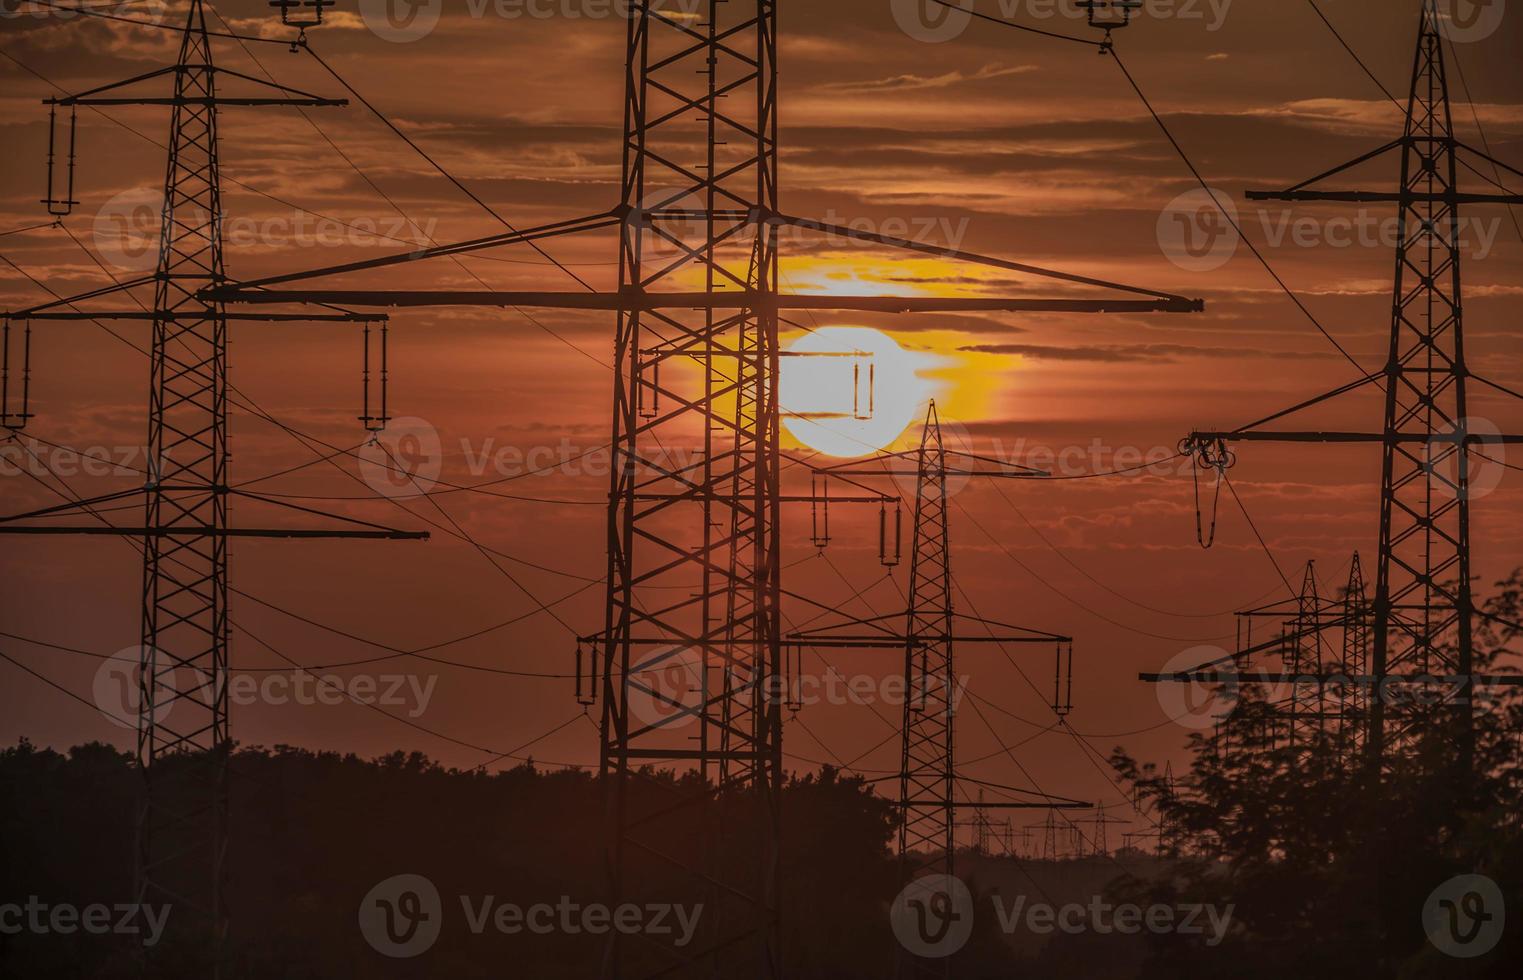 postes de energia na frente do sol poente foto